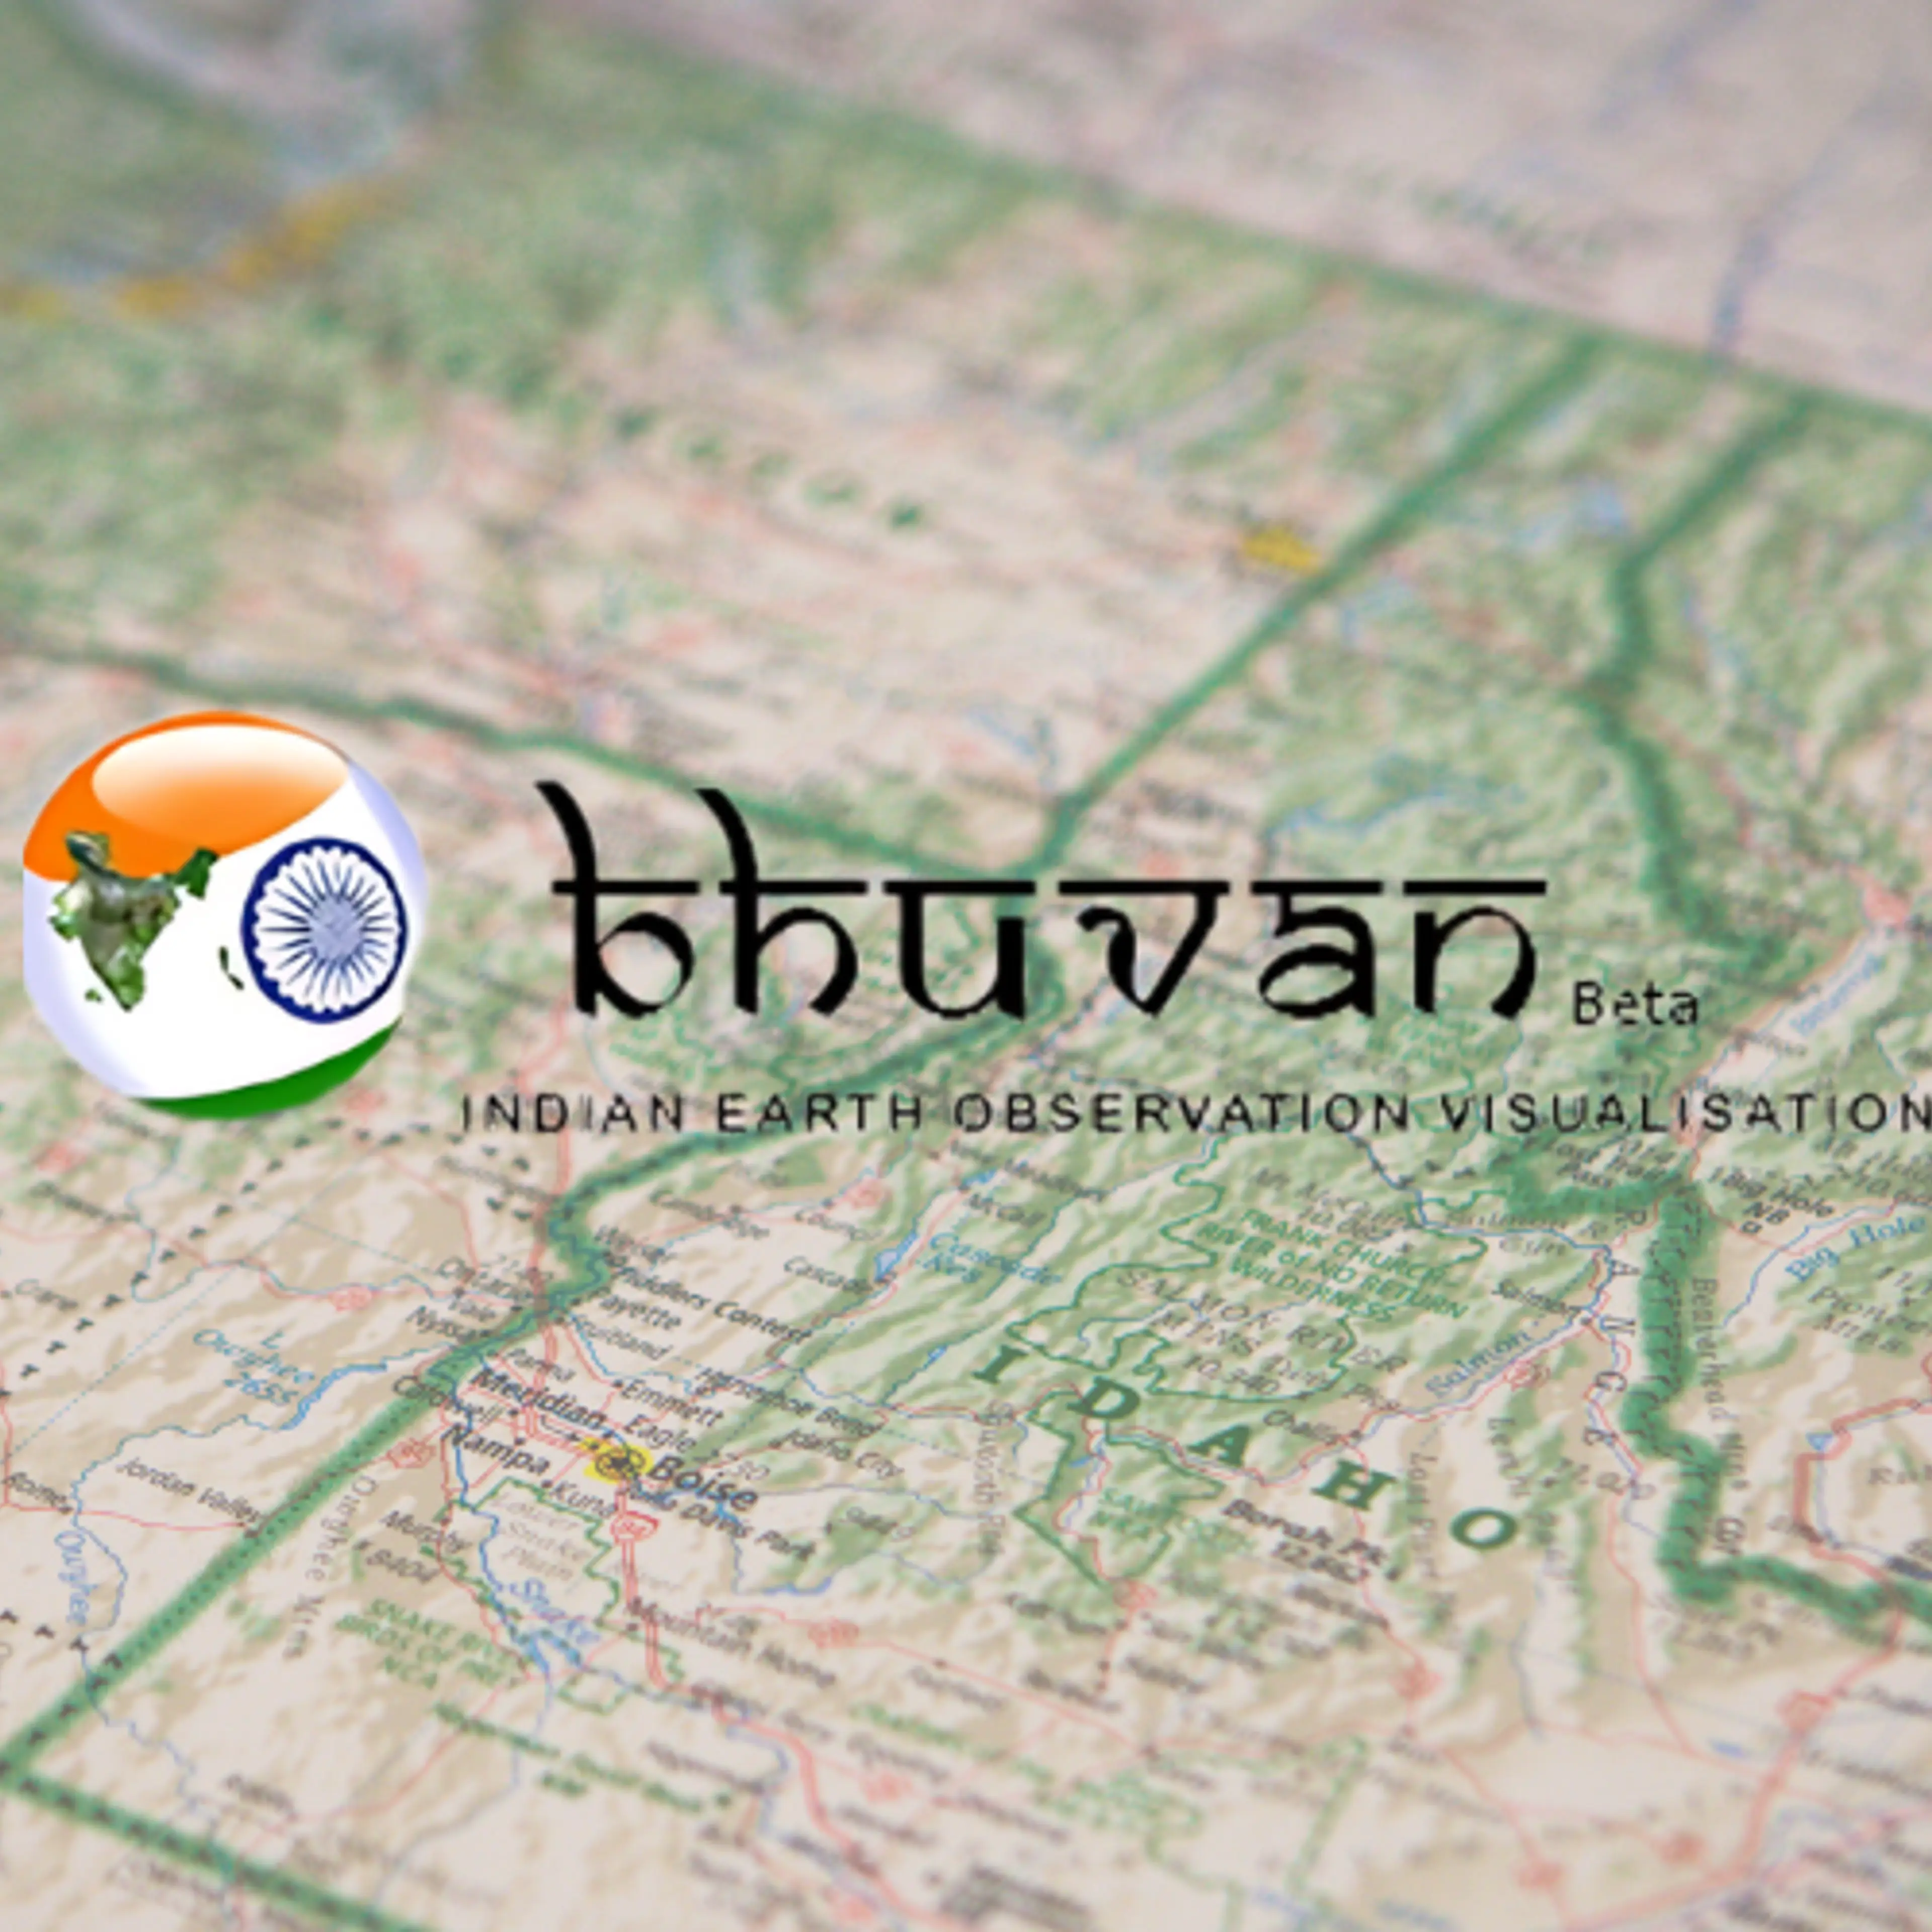 ISRO's Bhuvan: 10x More Detailed Than Google Maps